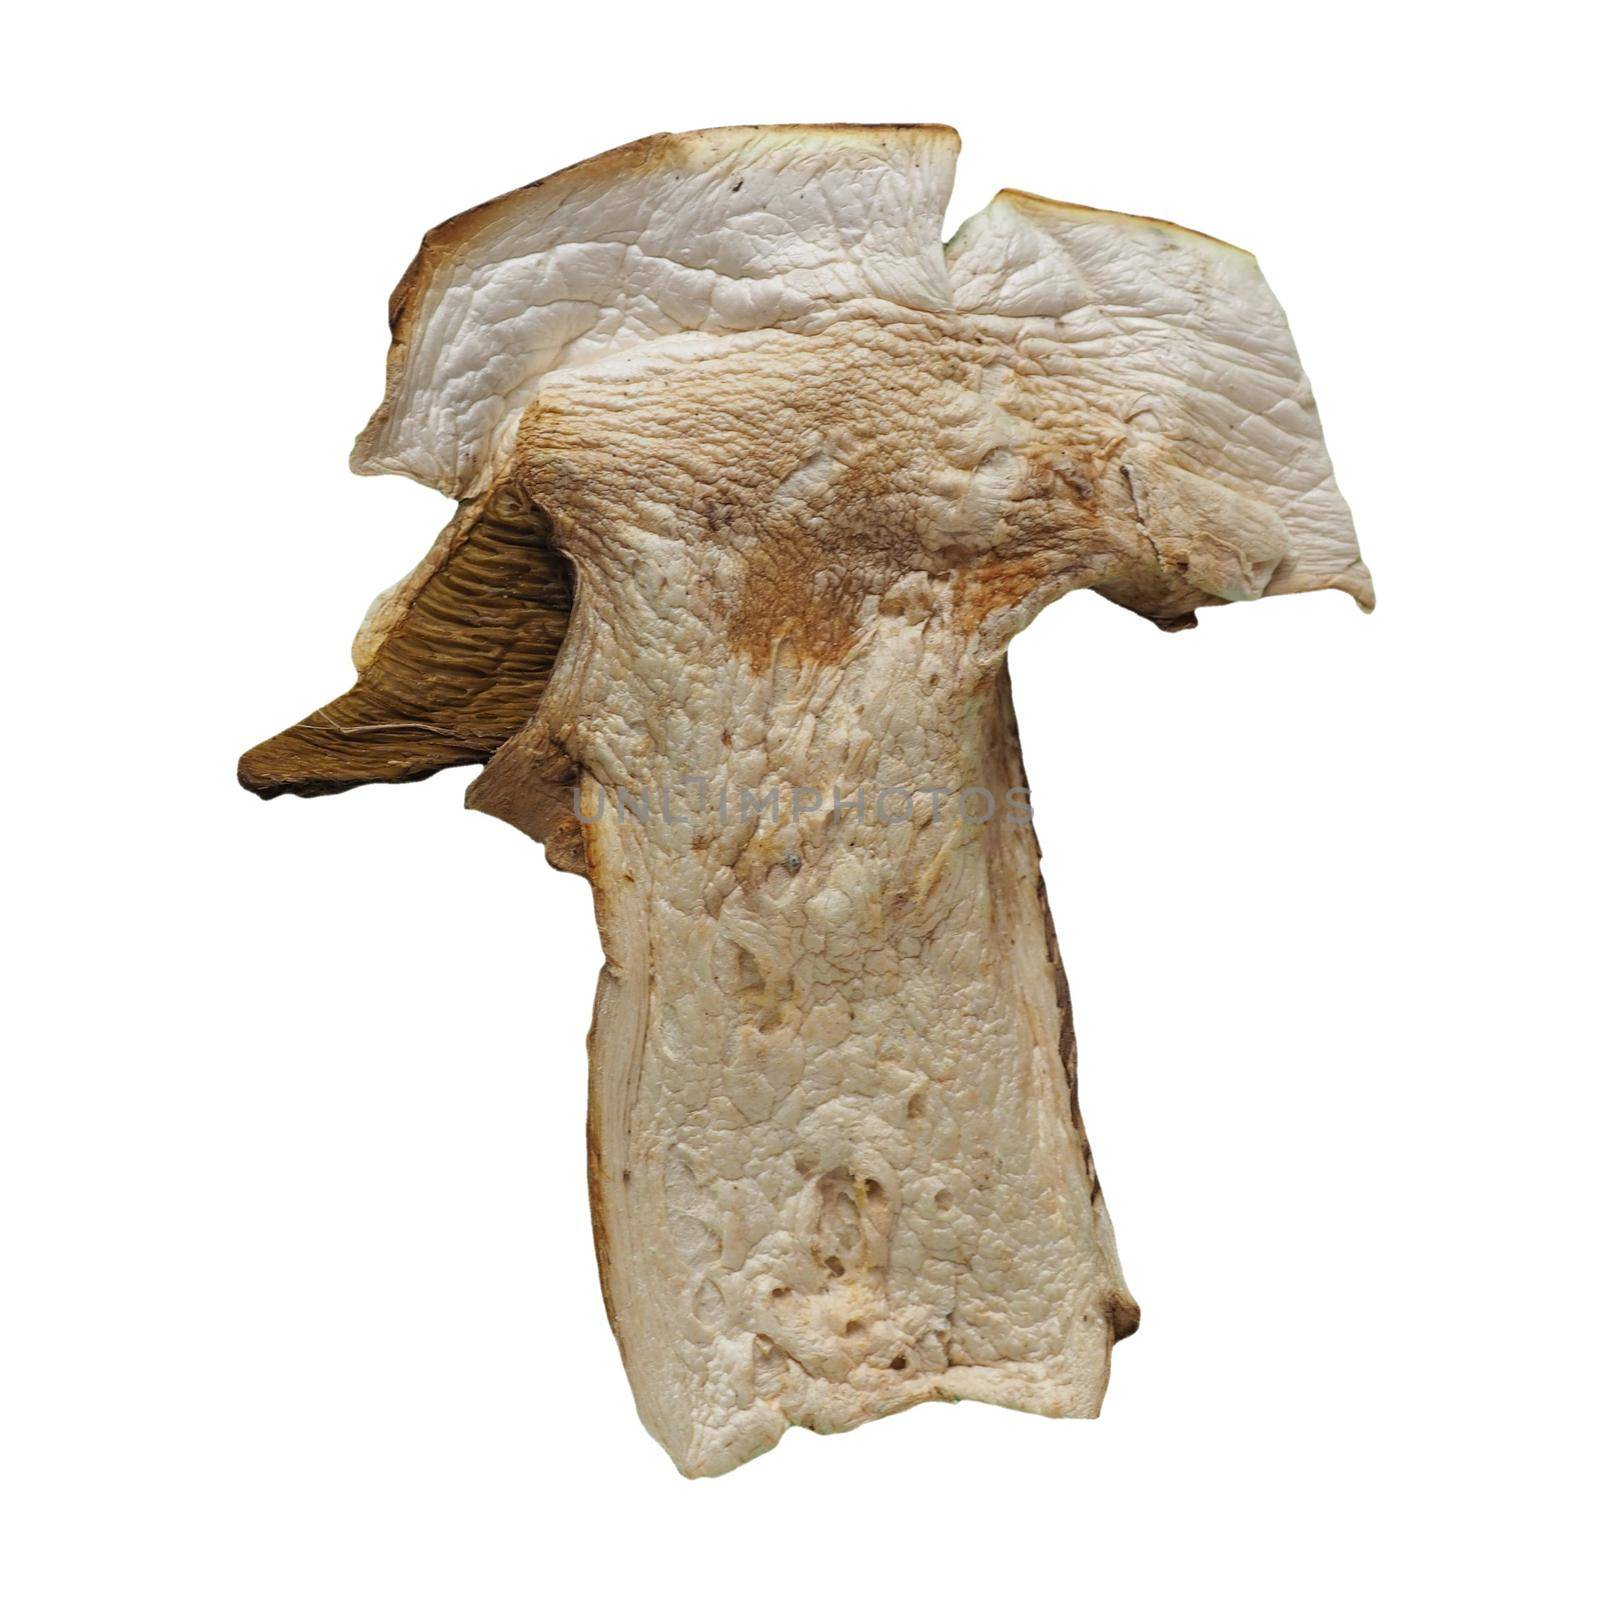 dried porcini (scientific name Boletus edulis) mushrooms vegetarian food isolated over white background